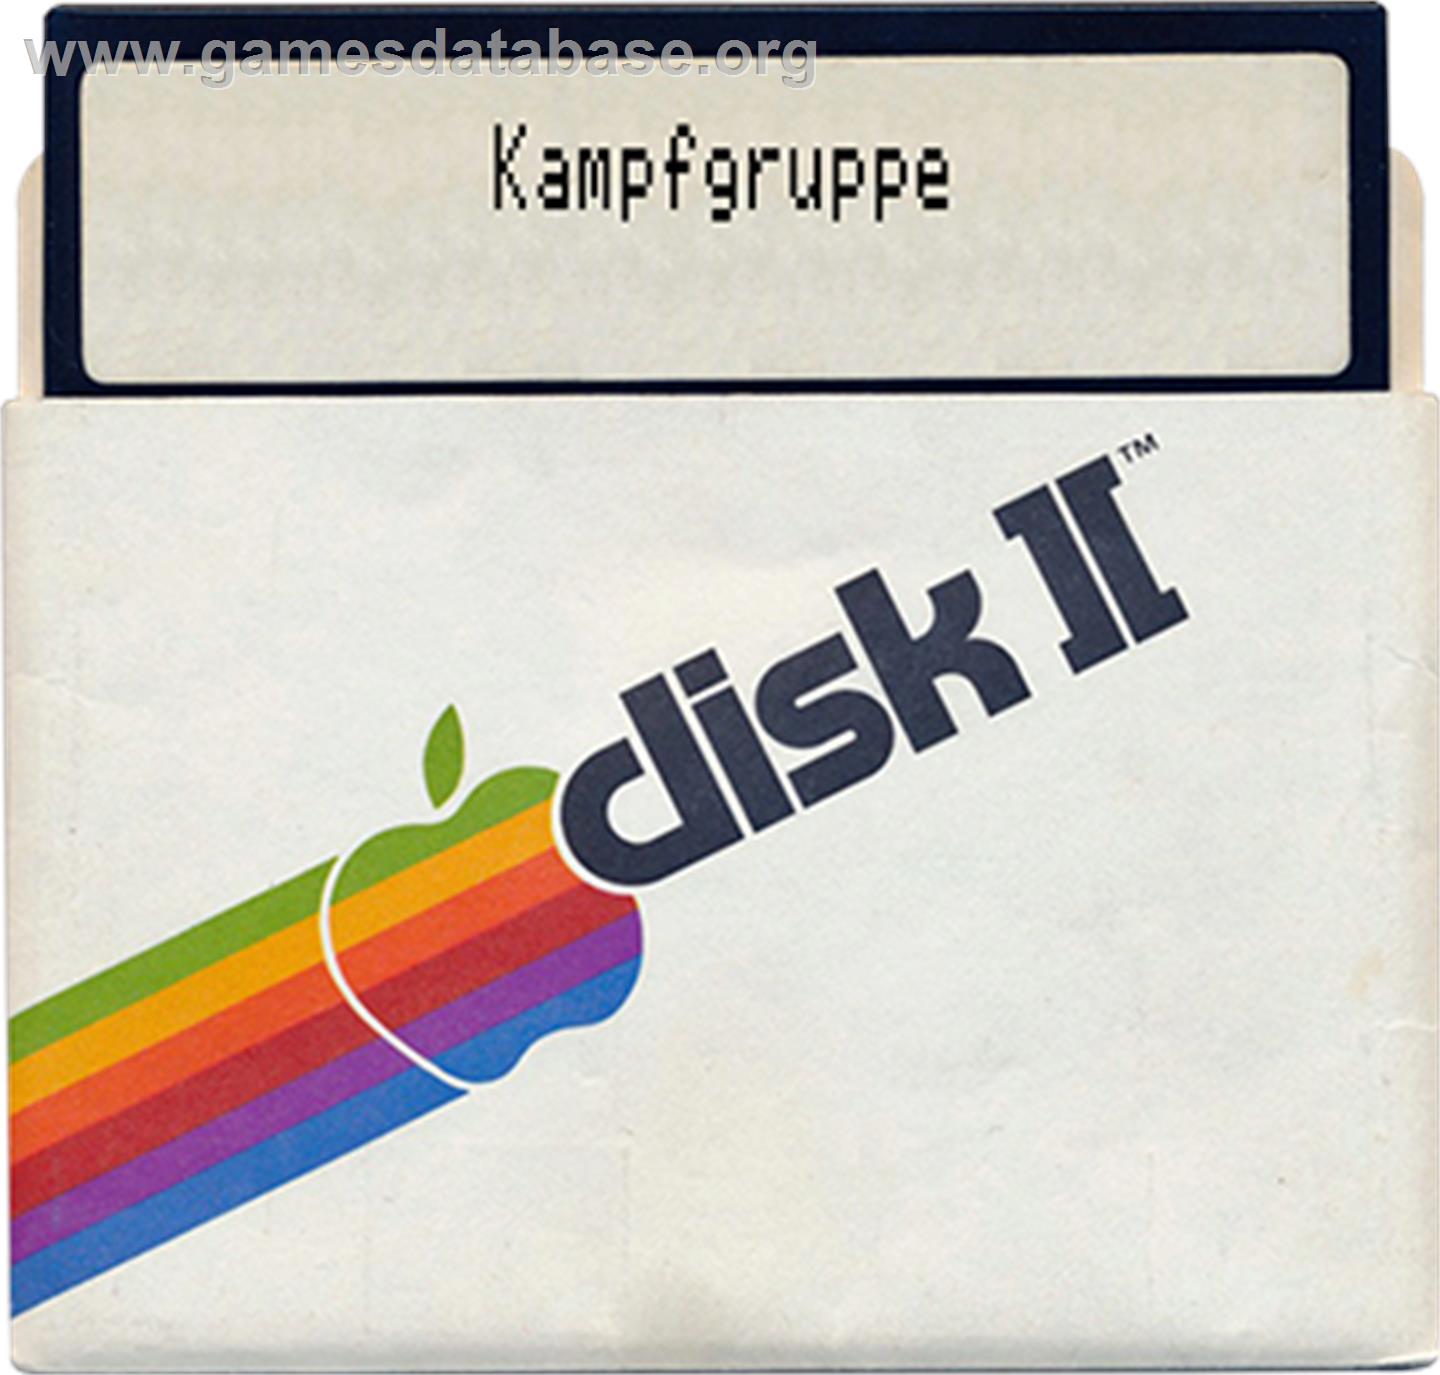 Kampfgruppe - Apple II - Artwork - Disc